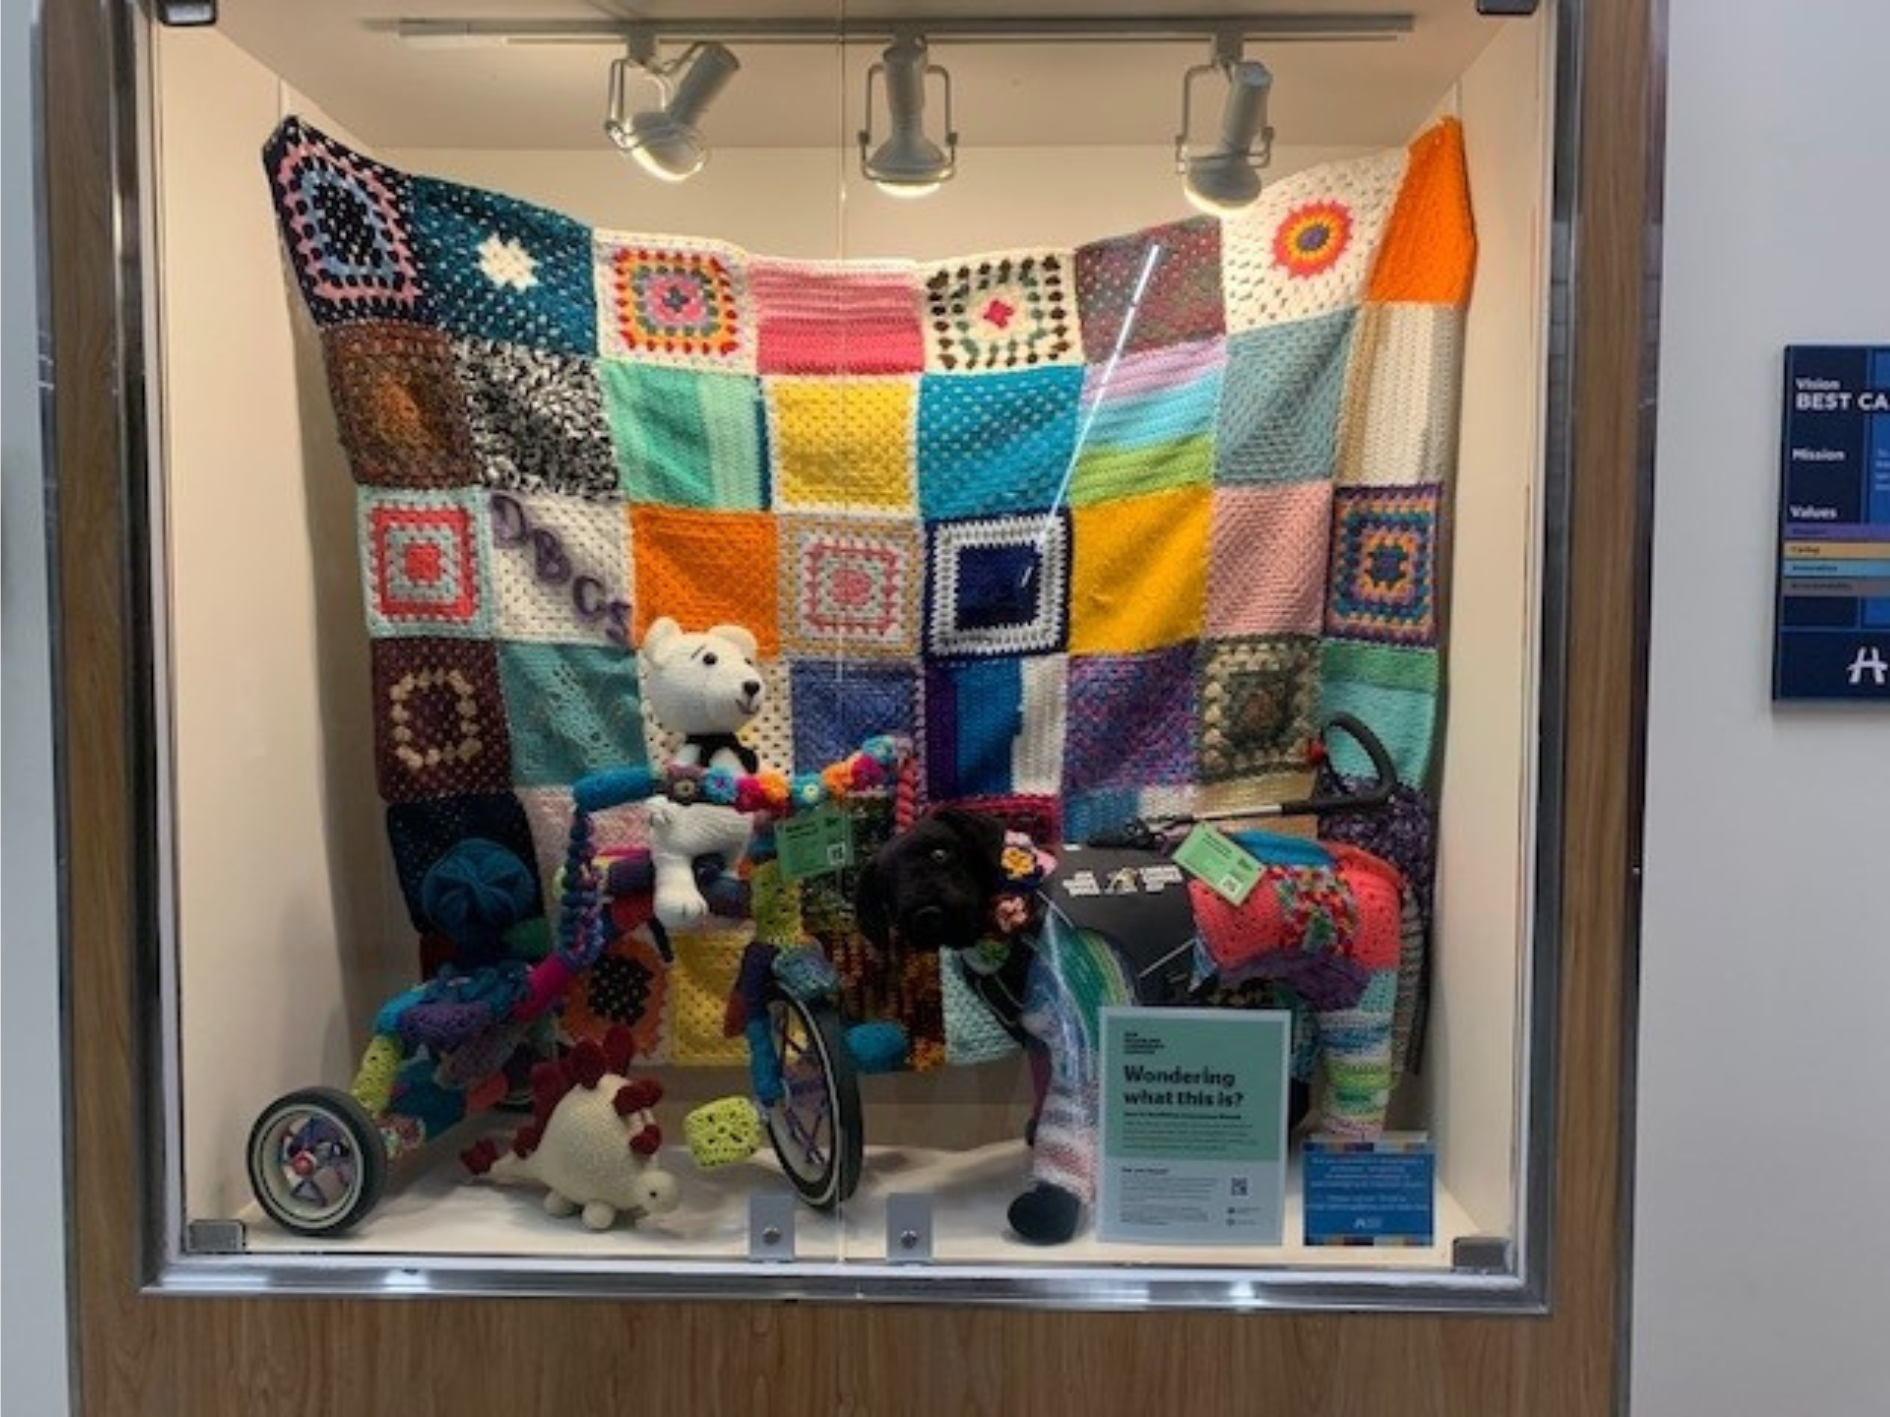 yarn bombing display at Halton health